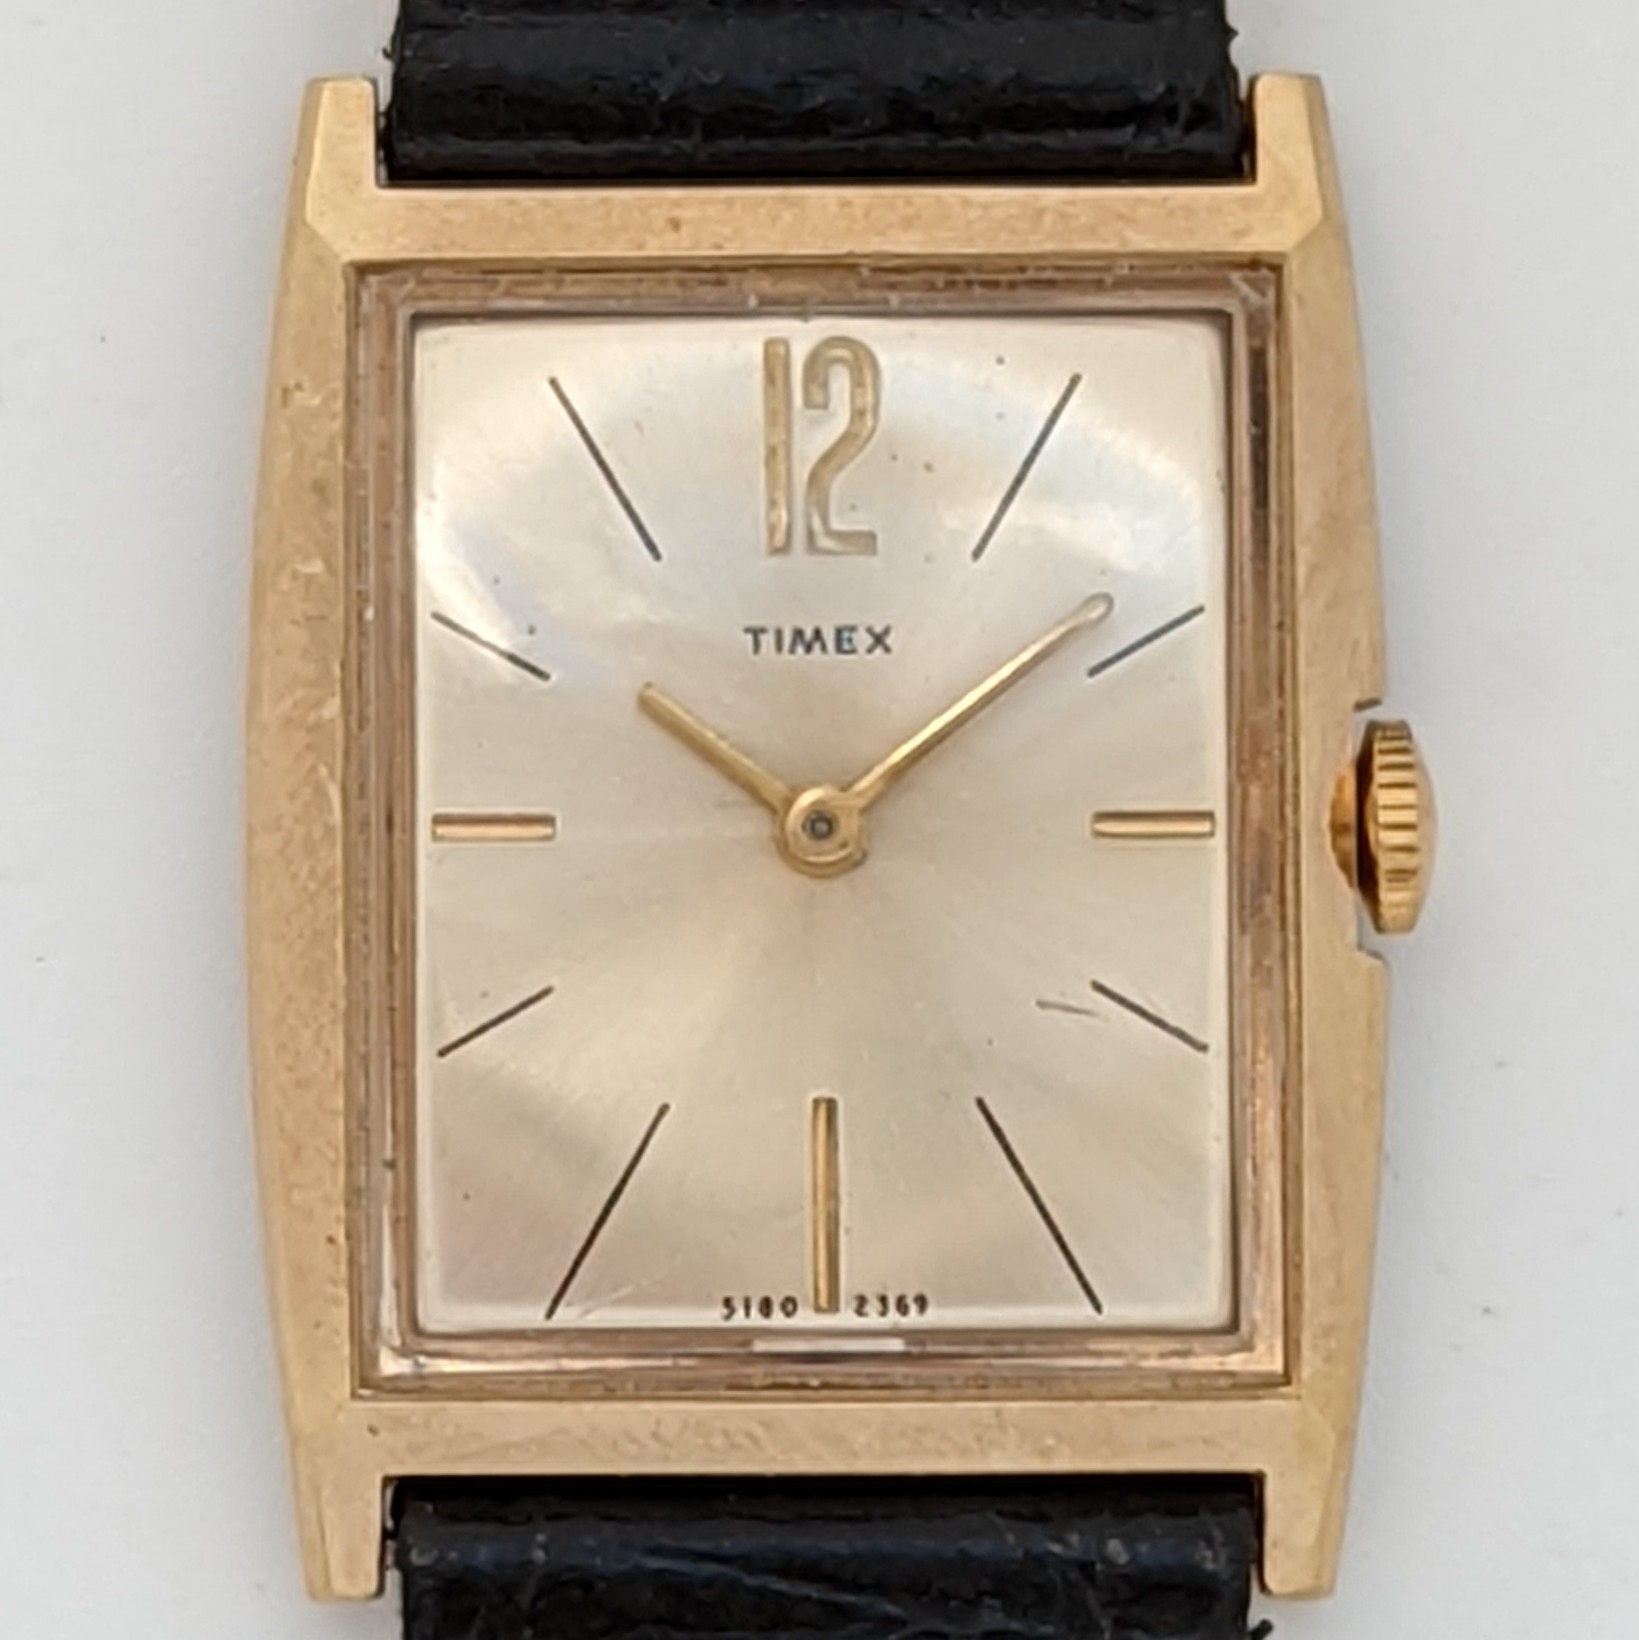 Timex Super Thin 5180 2368 [1968]